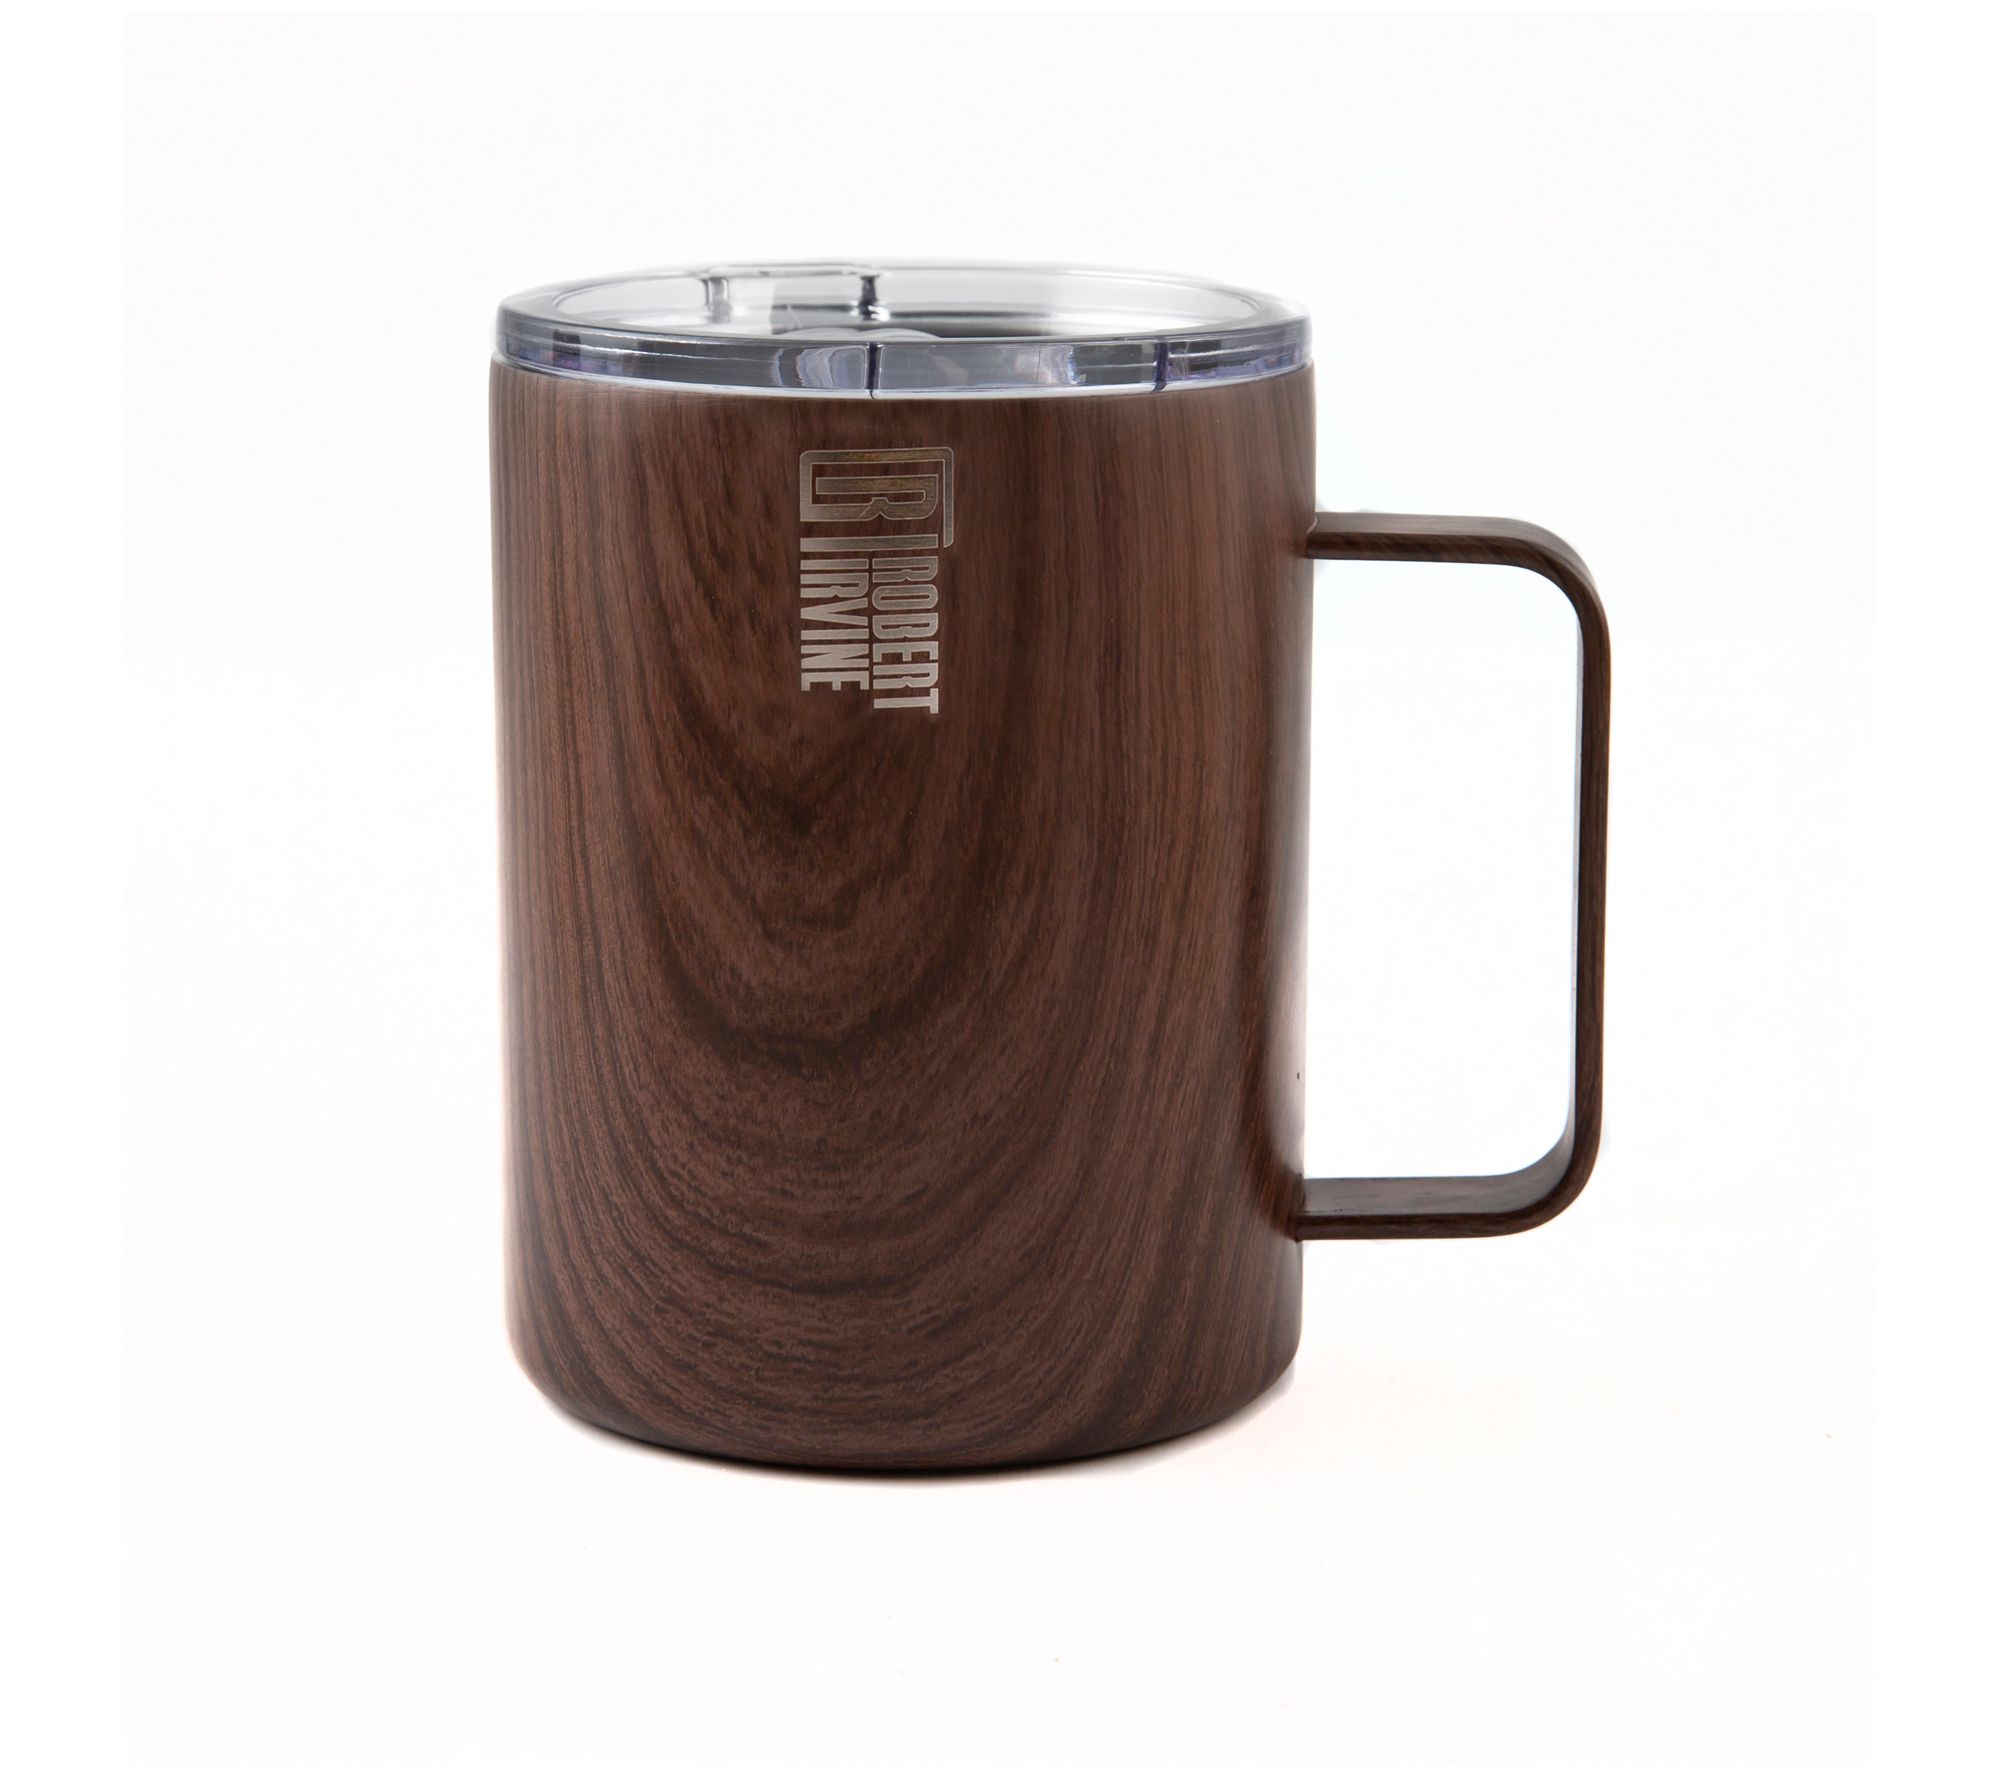 Robert Irvine Insulated 20-oz. Travel Coffee Mug, Wood